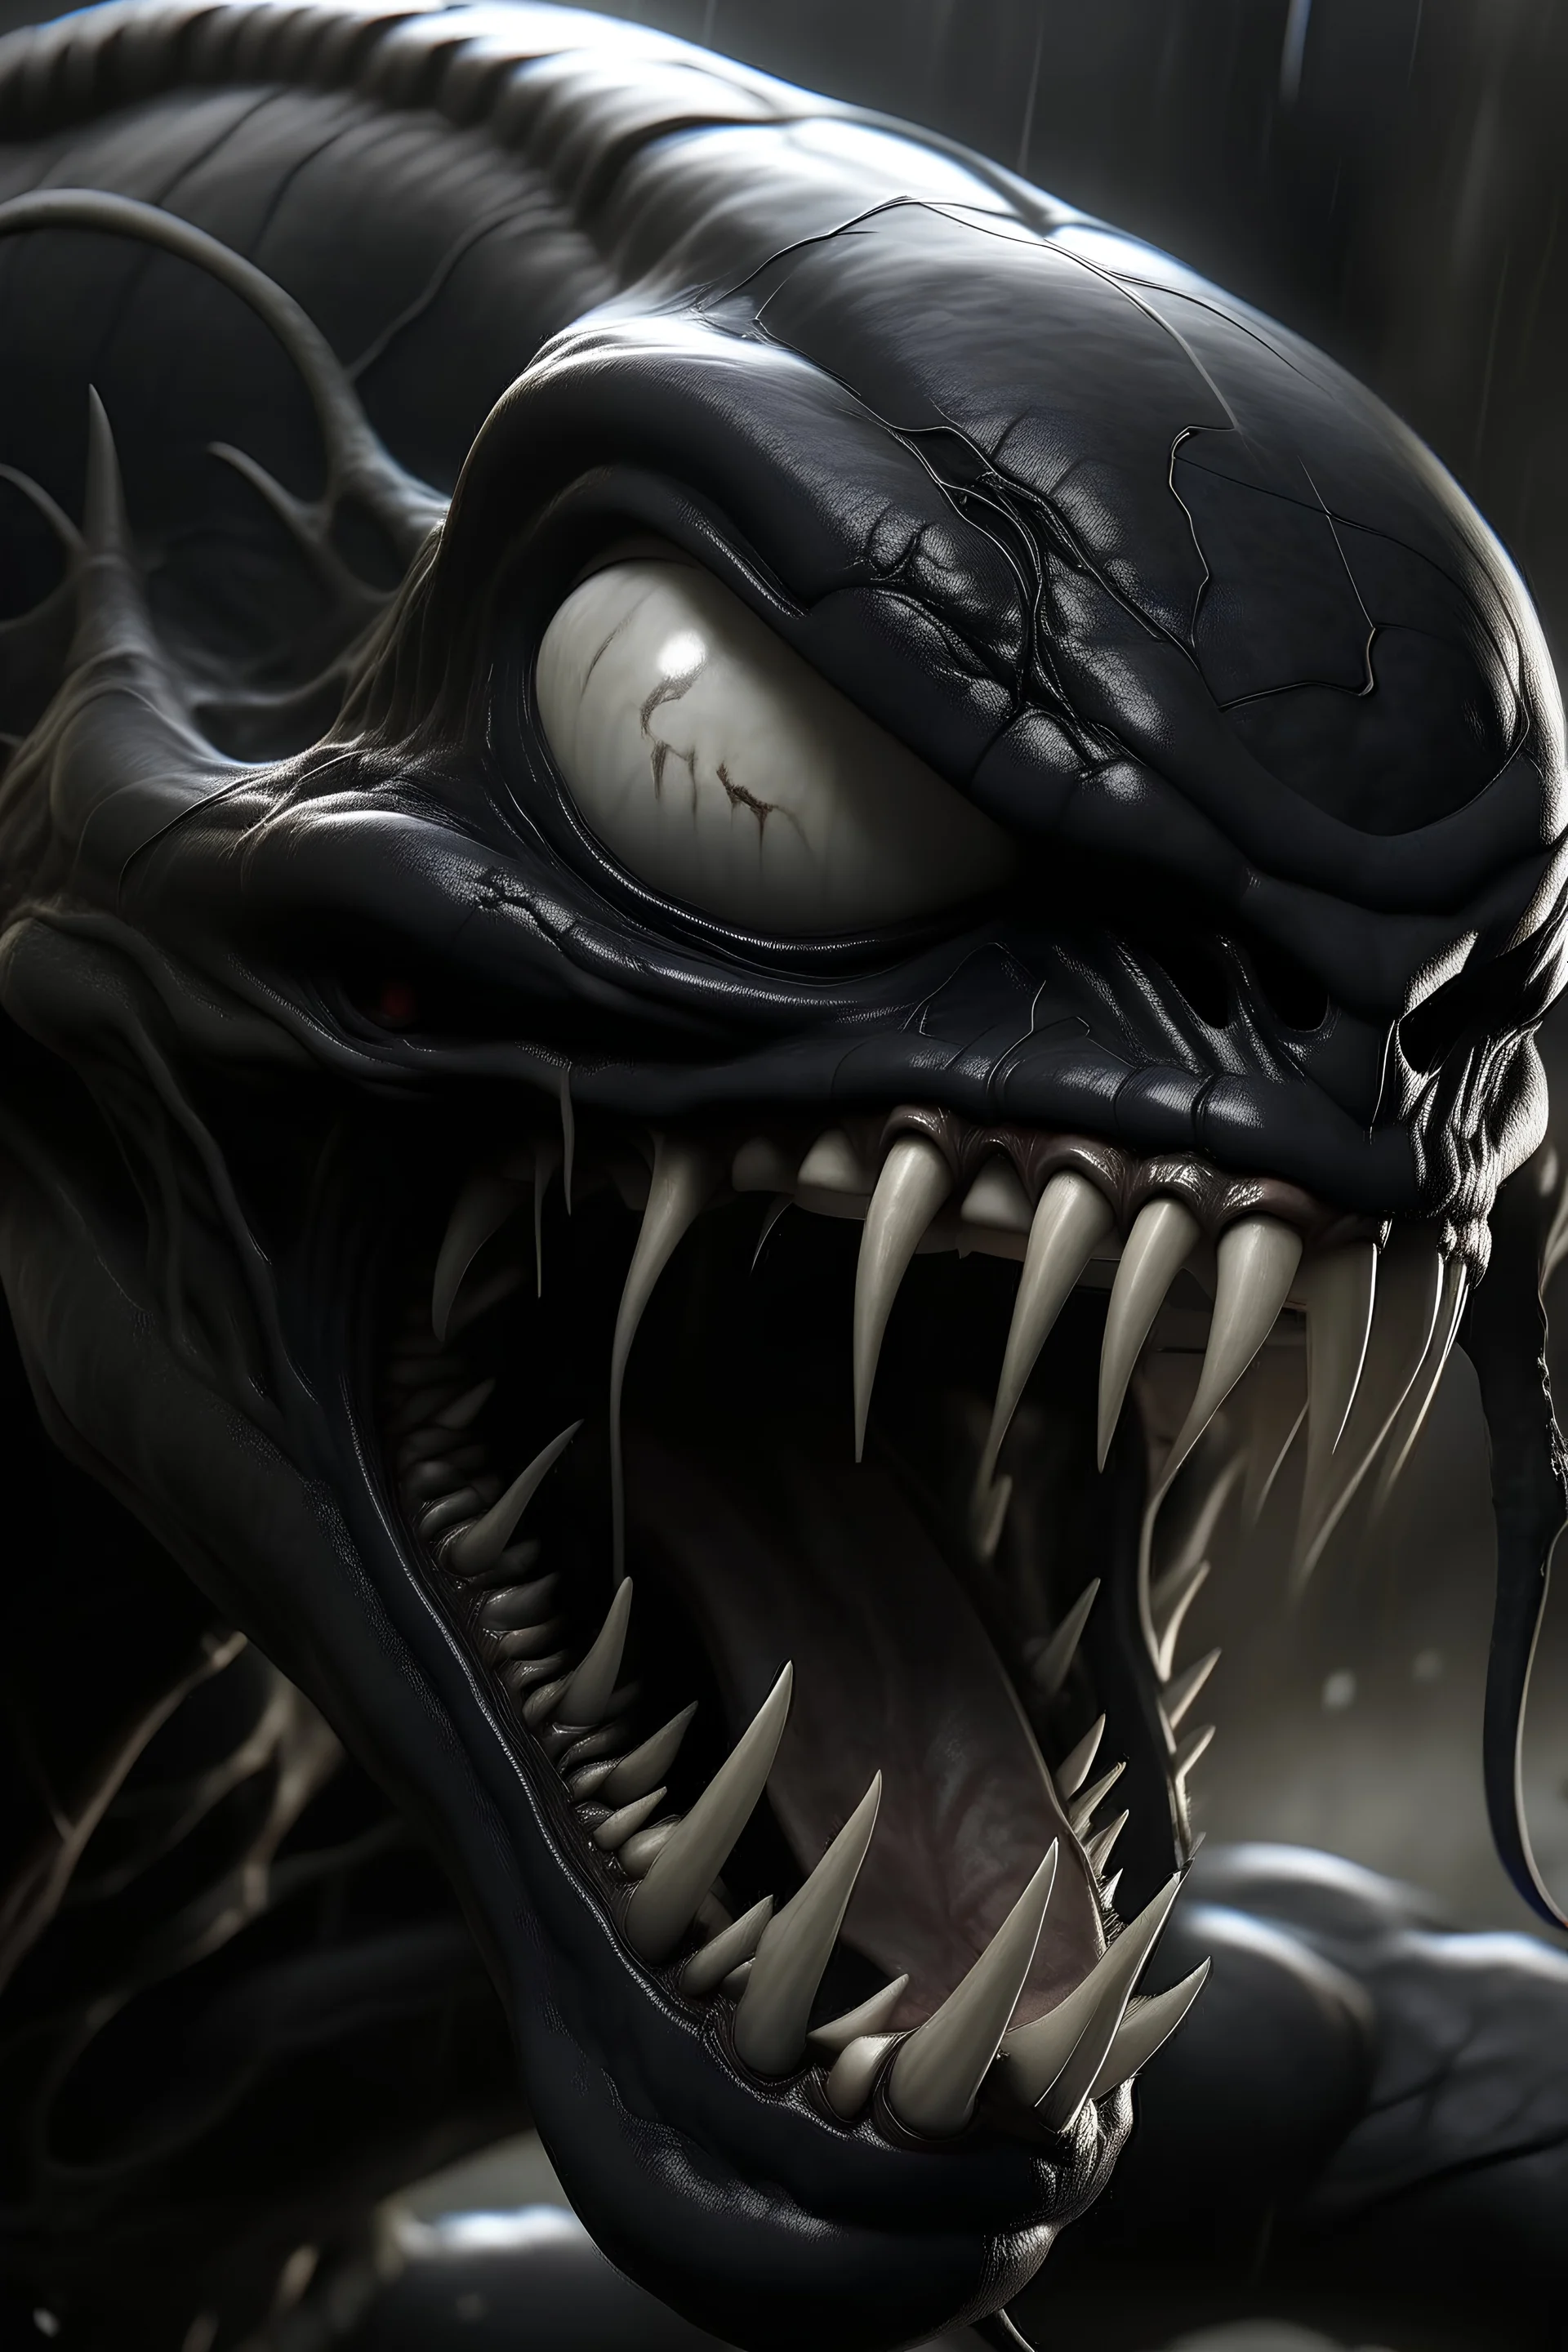 Venom biting someone’s head iff